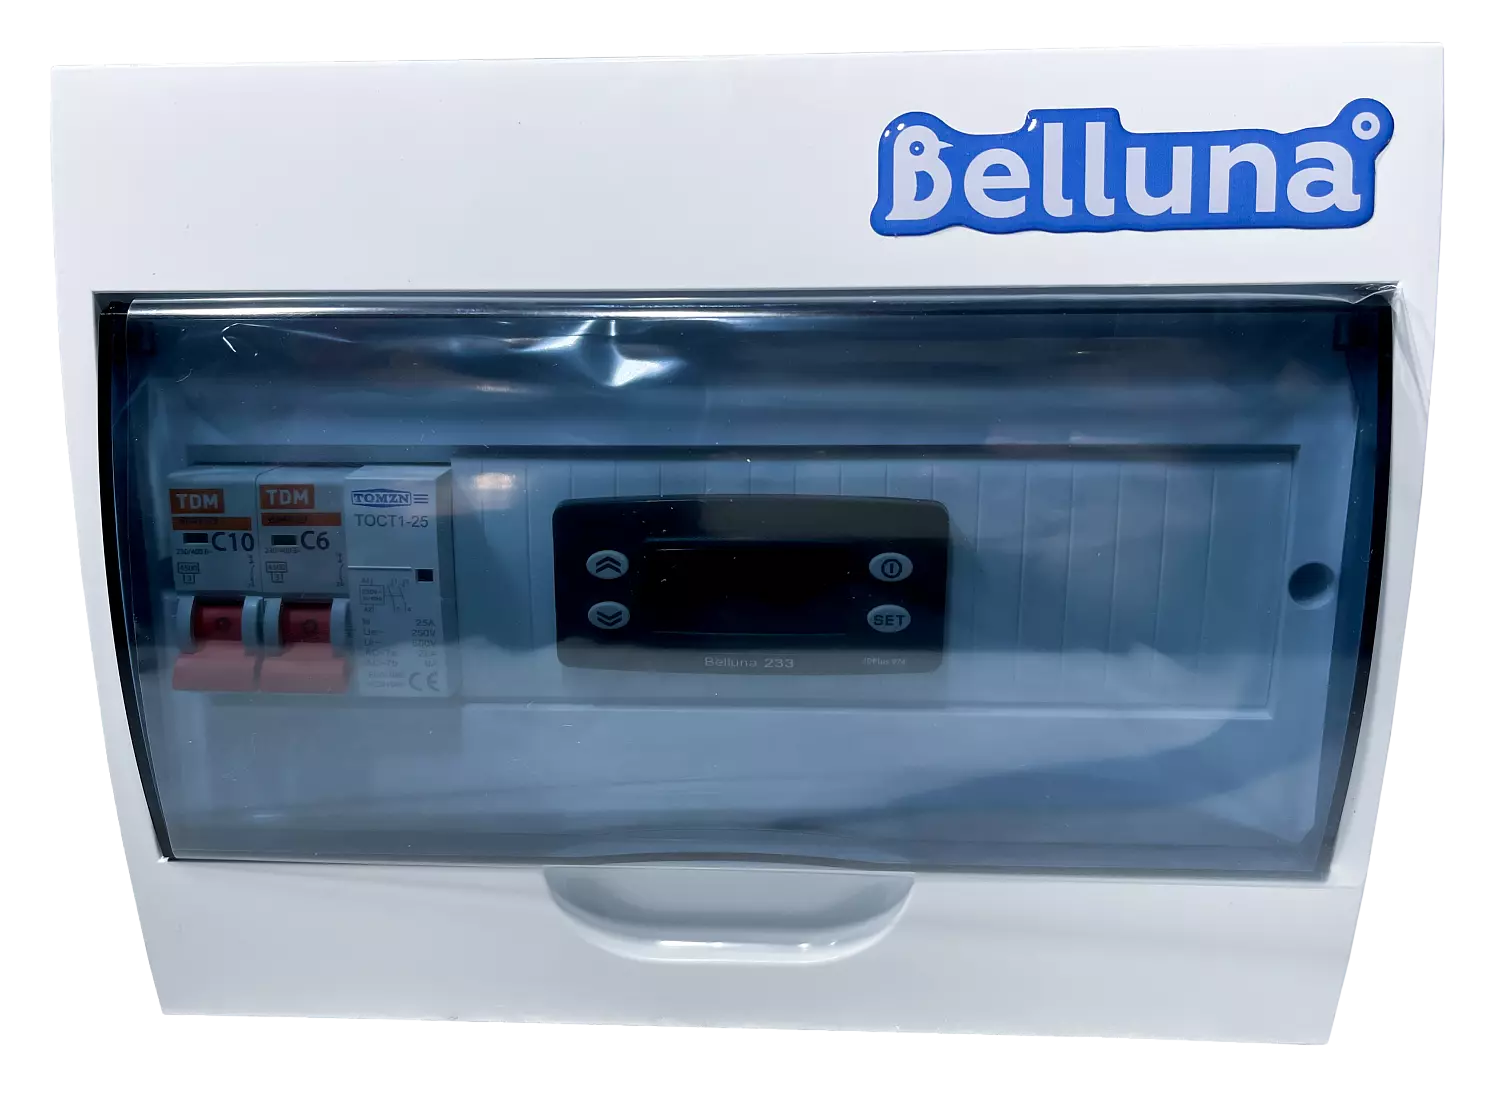 сплит-система Belluna S218 W Омск